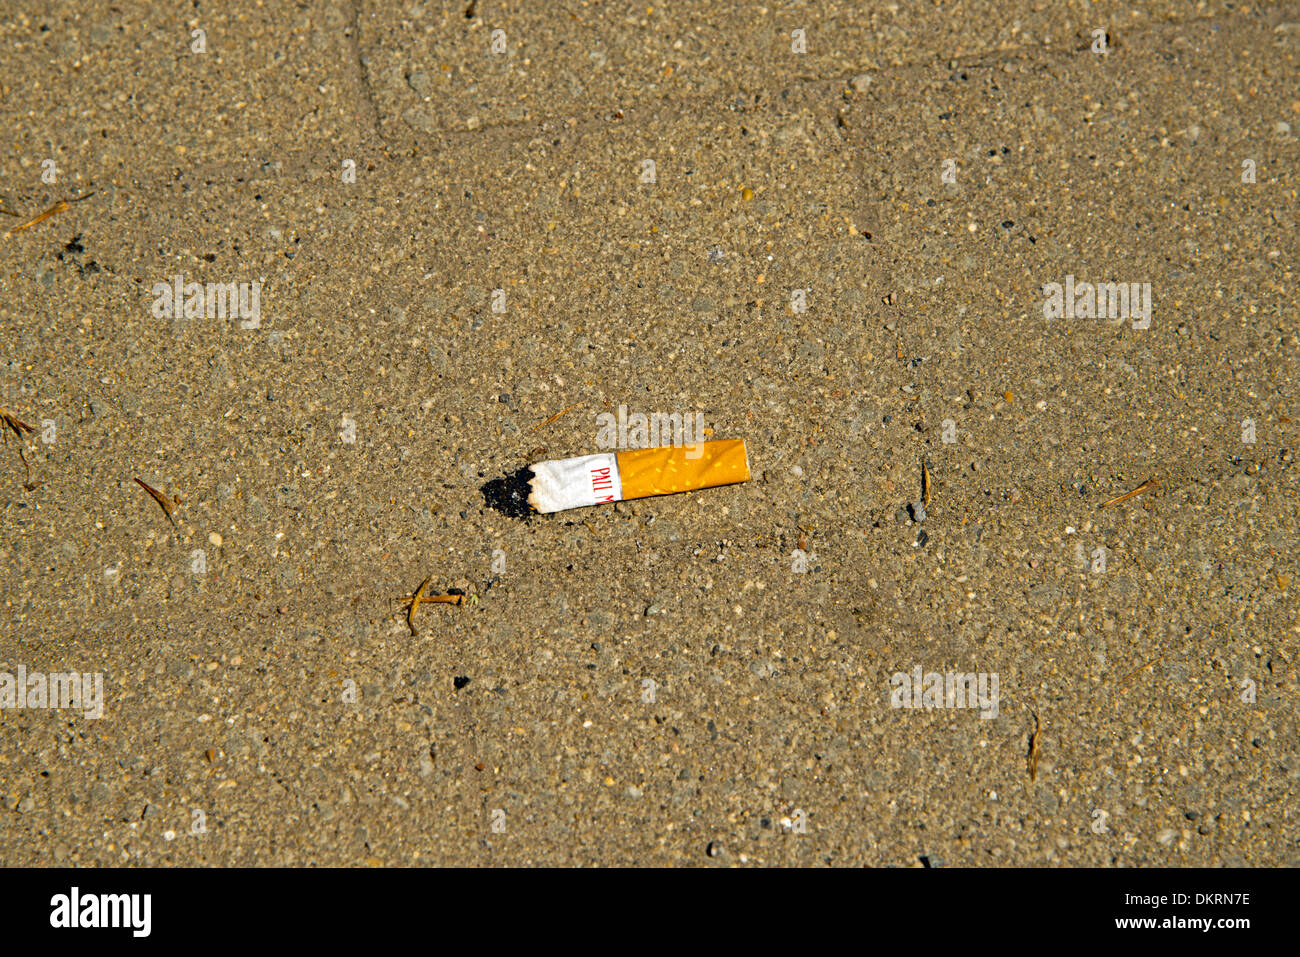 Street, ground, bottom, throw away, cigarette, fag, rubbish, waste, environmental pollution, Stock Photo